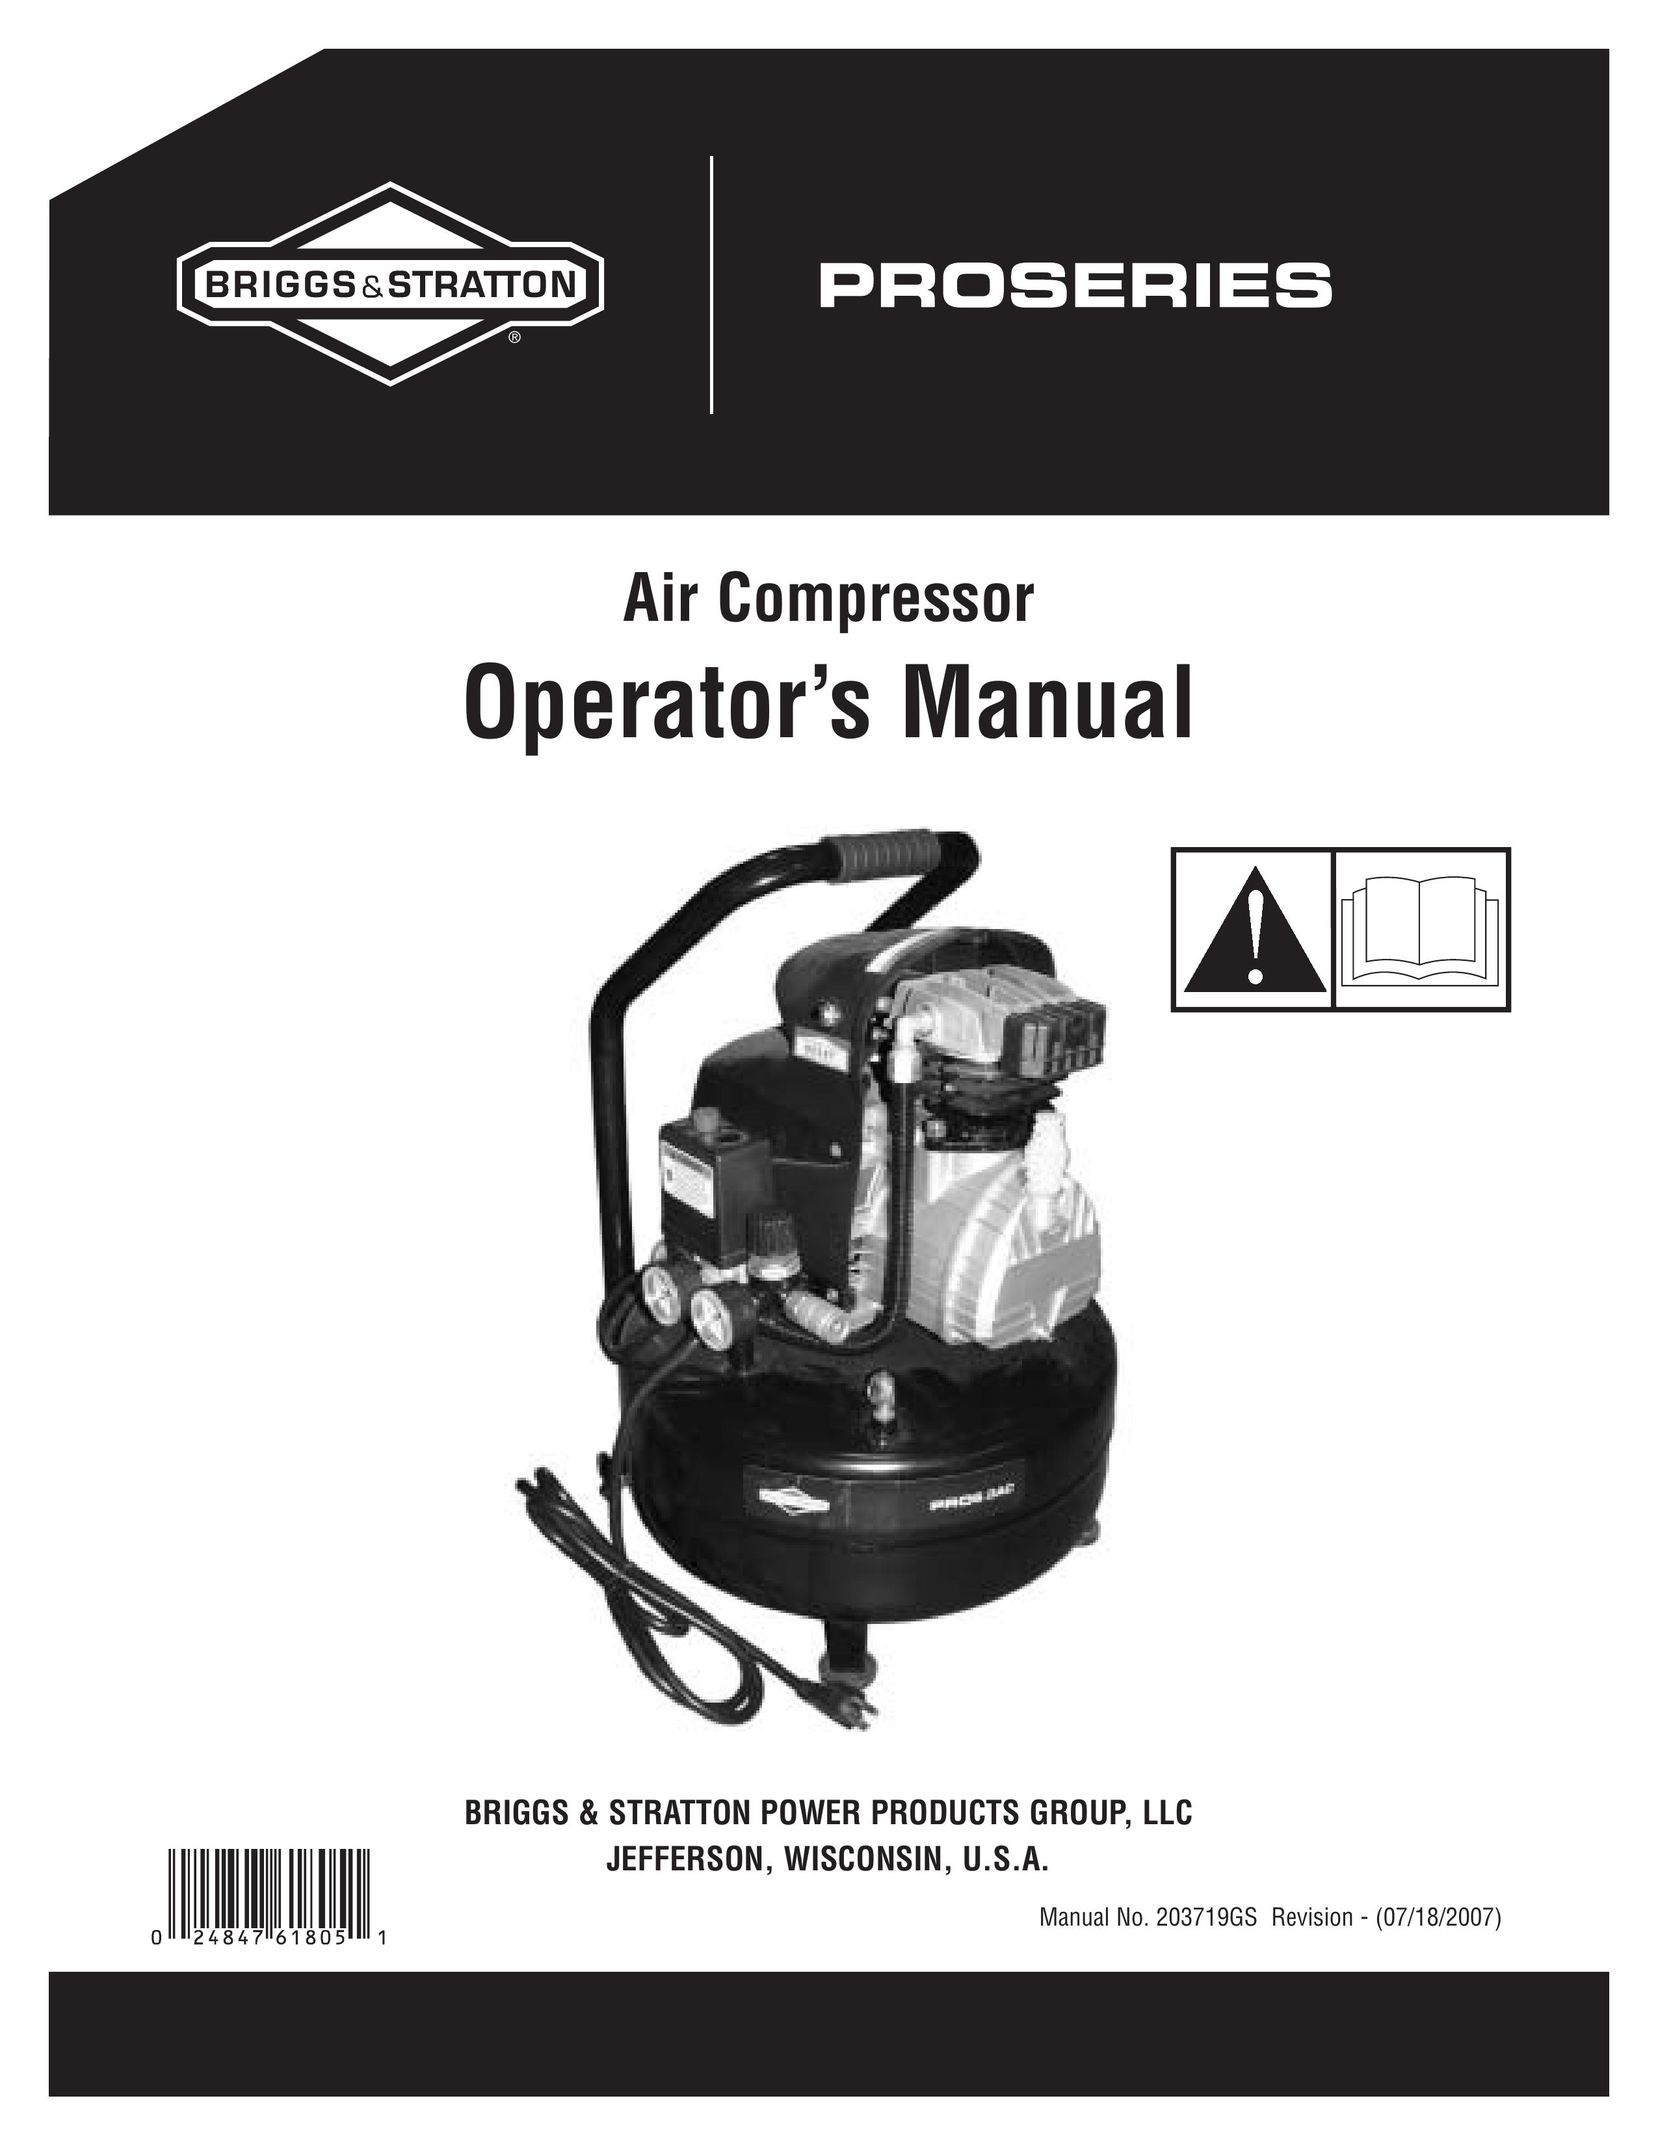 Briggs & Stratton Proseries Air Compressor User Manual